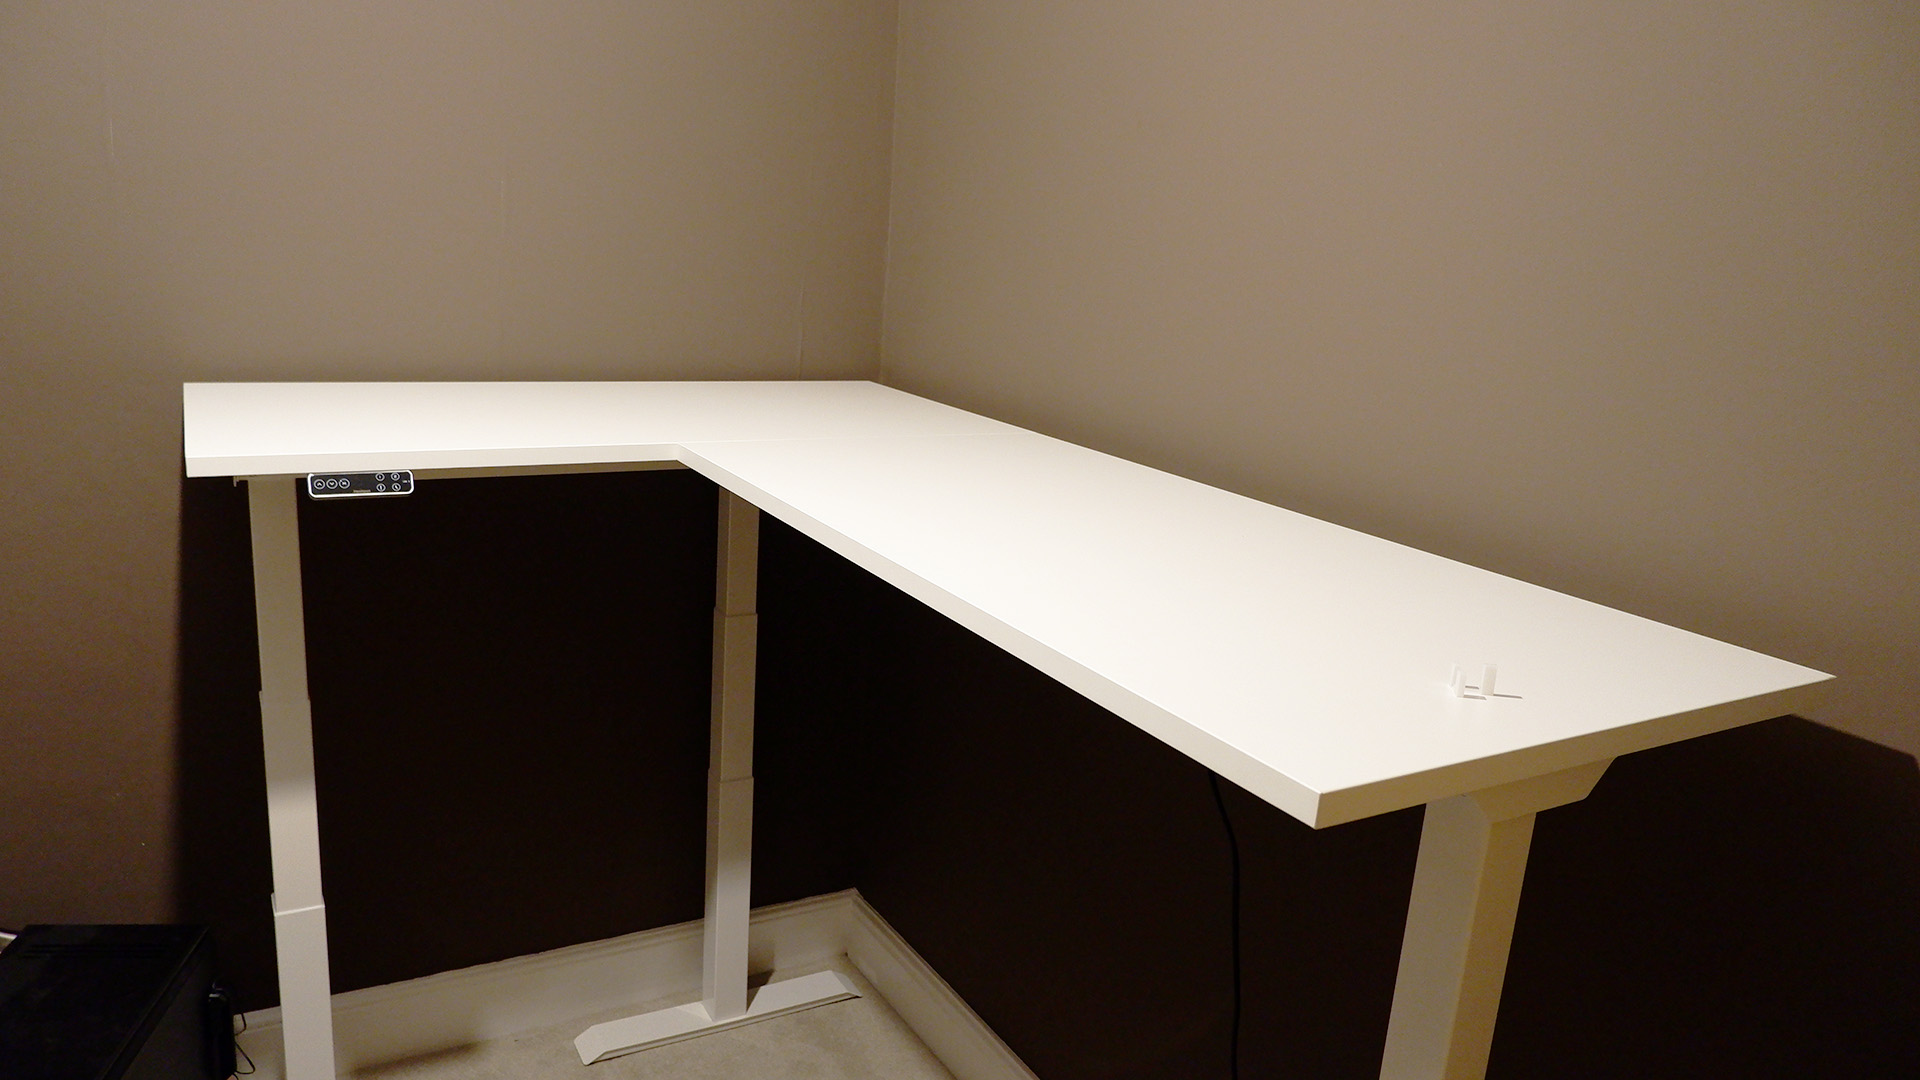 Flexispot E7L adjustable standing desk review